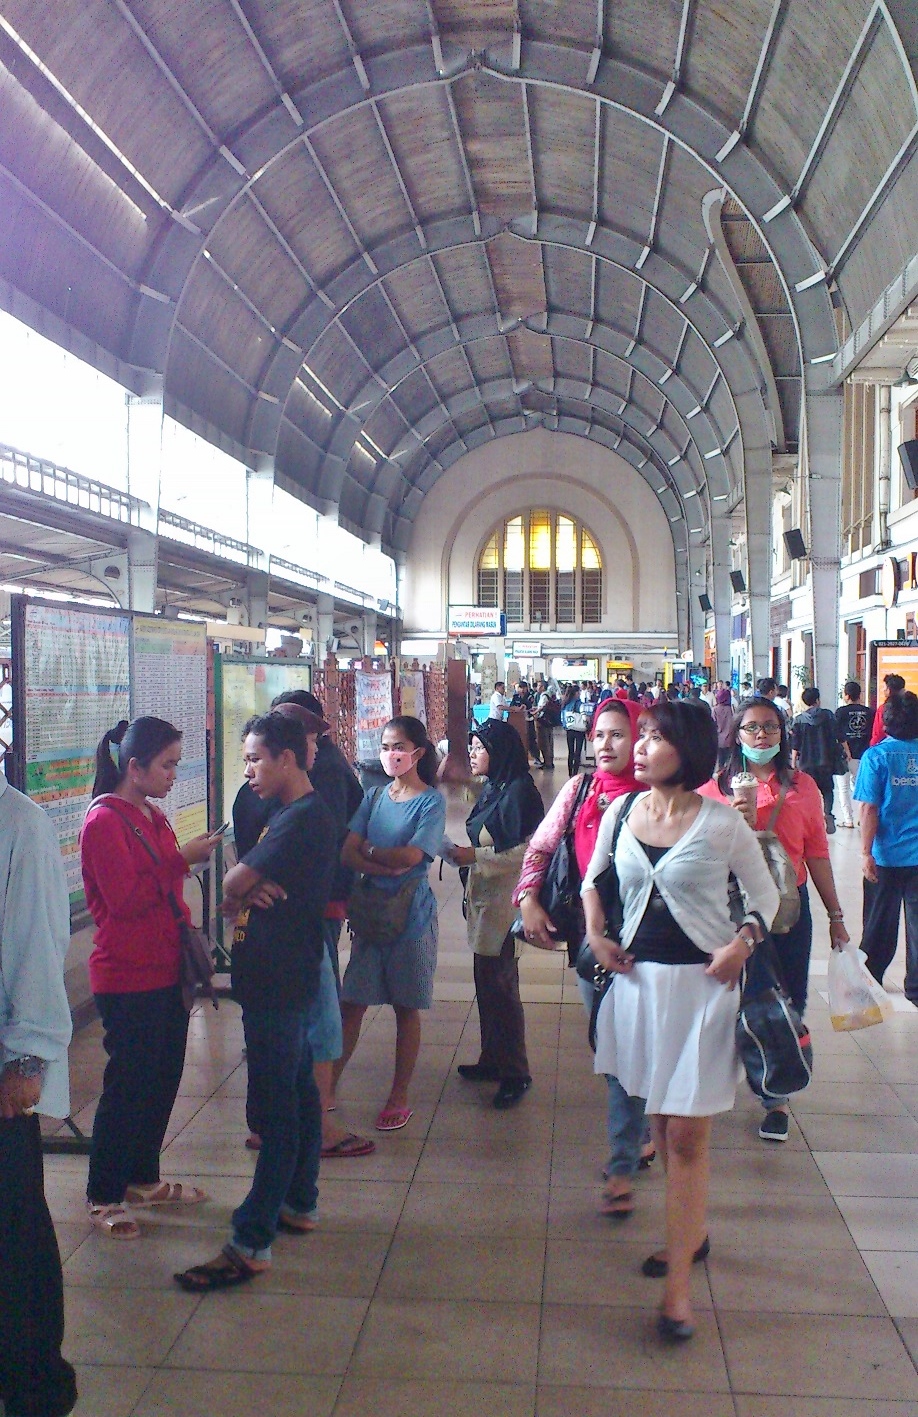 Inside the Station